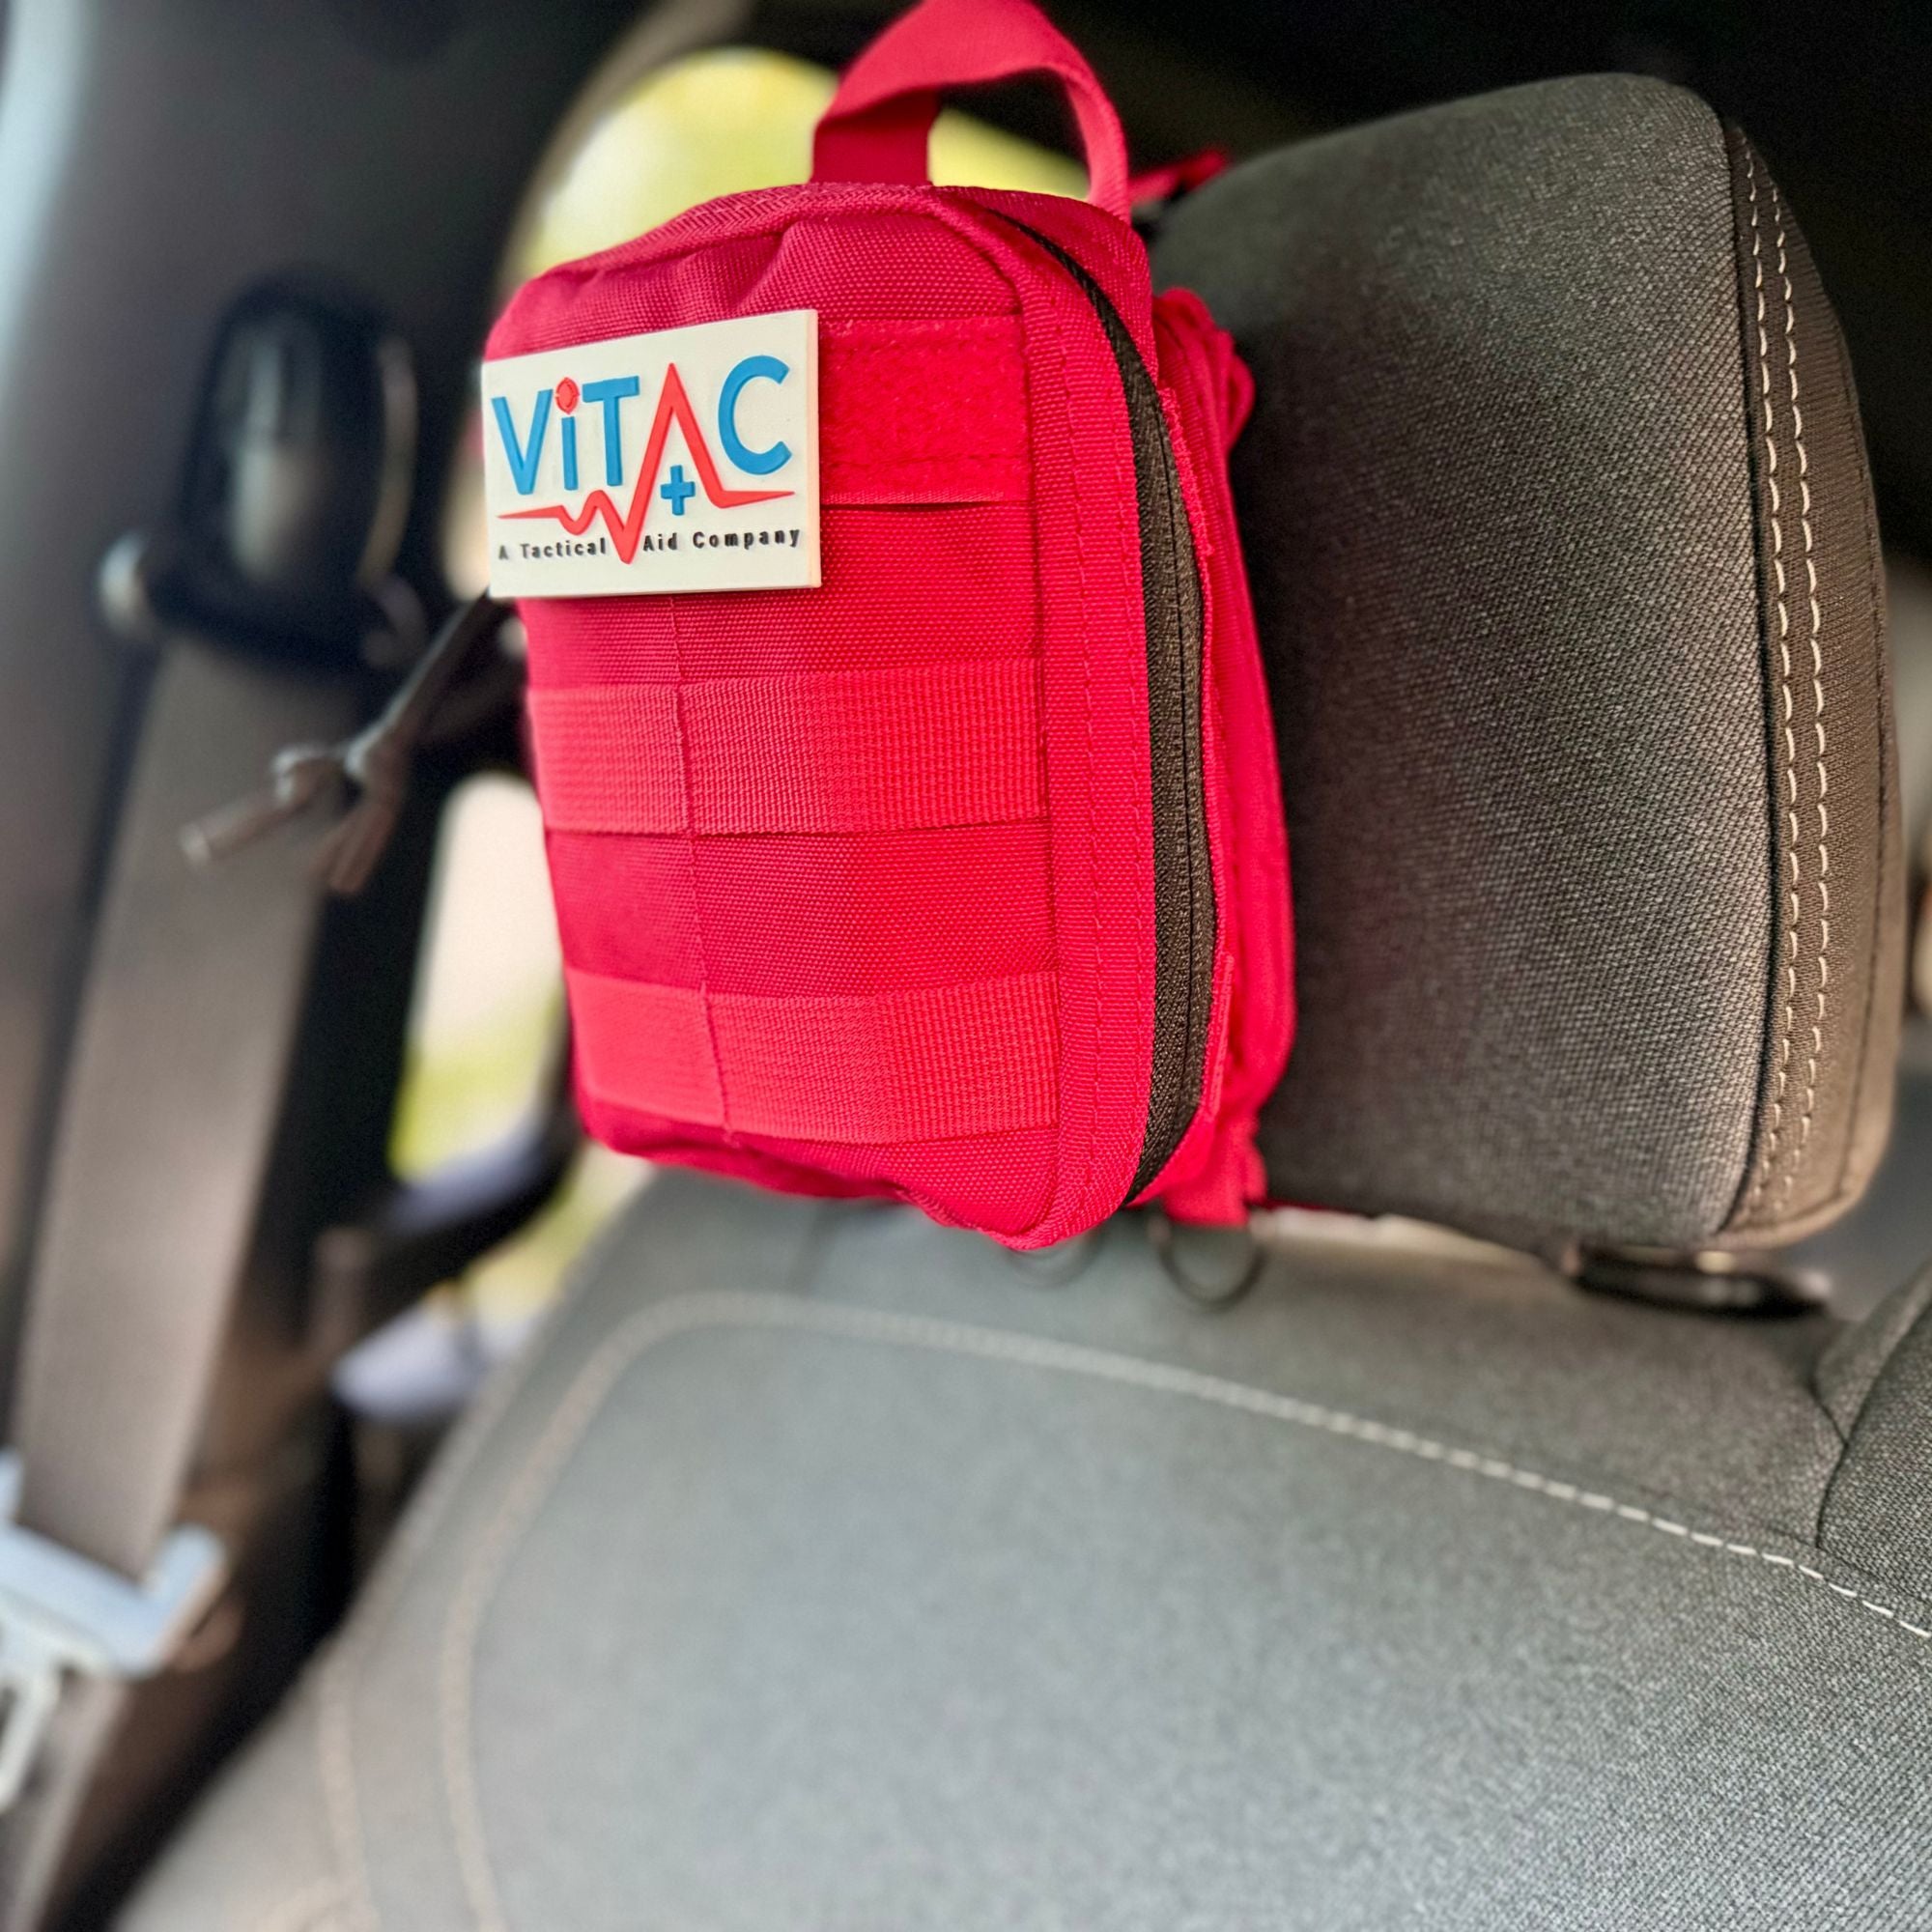 ViTAC Everyday Carry (EDC) Trauma Kit